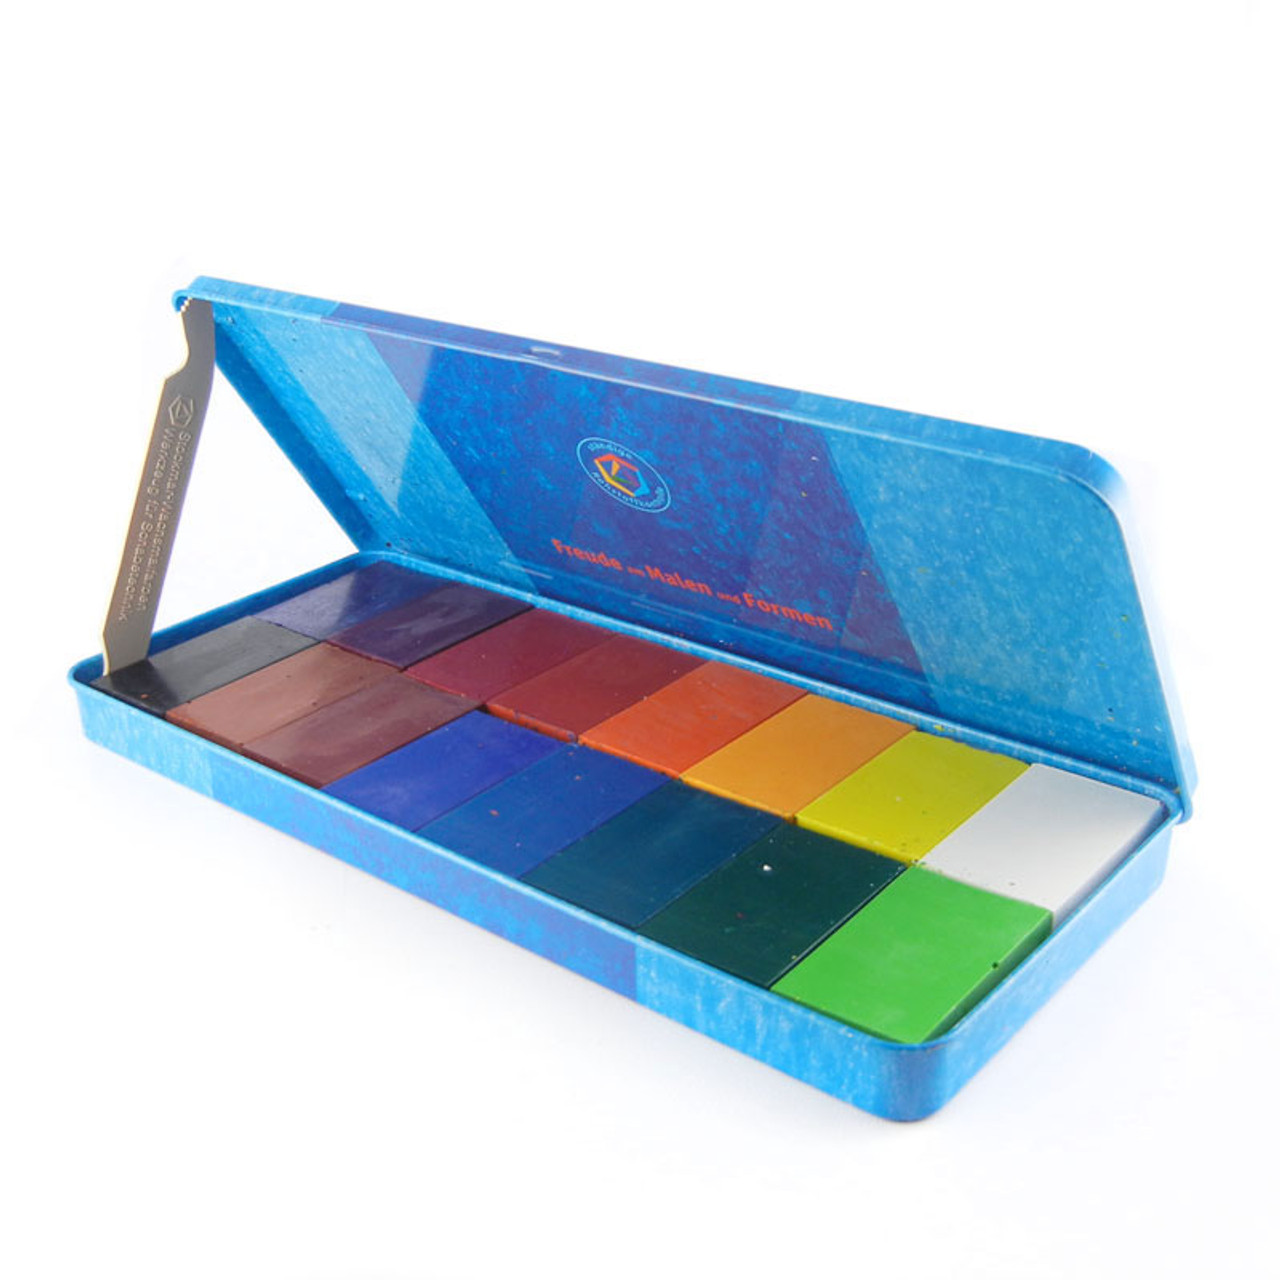 Stockmar Crayons Beeswax safe and nontoxic drawing wax block pen 8 16 color  tin box Nurture the sense Colouring qualities